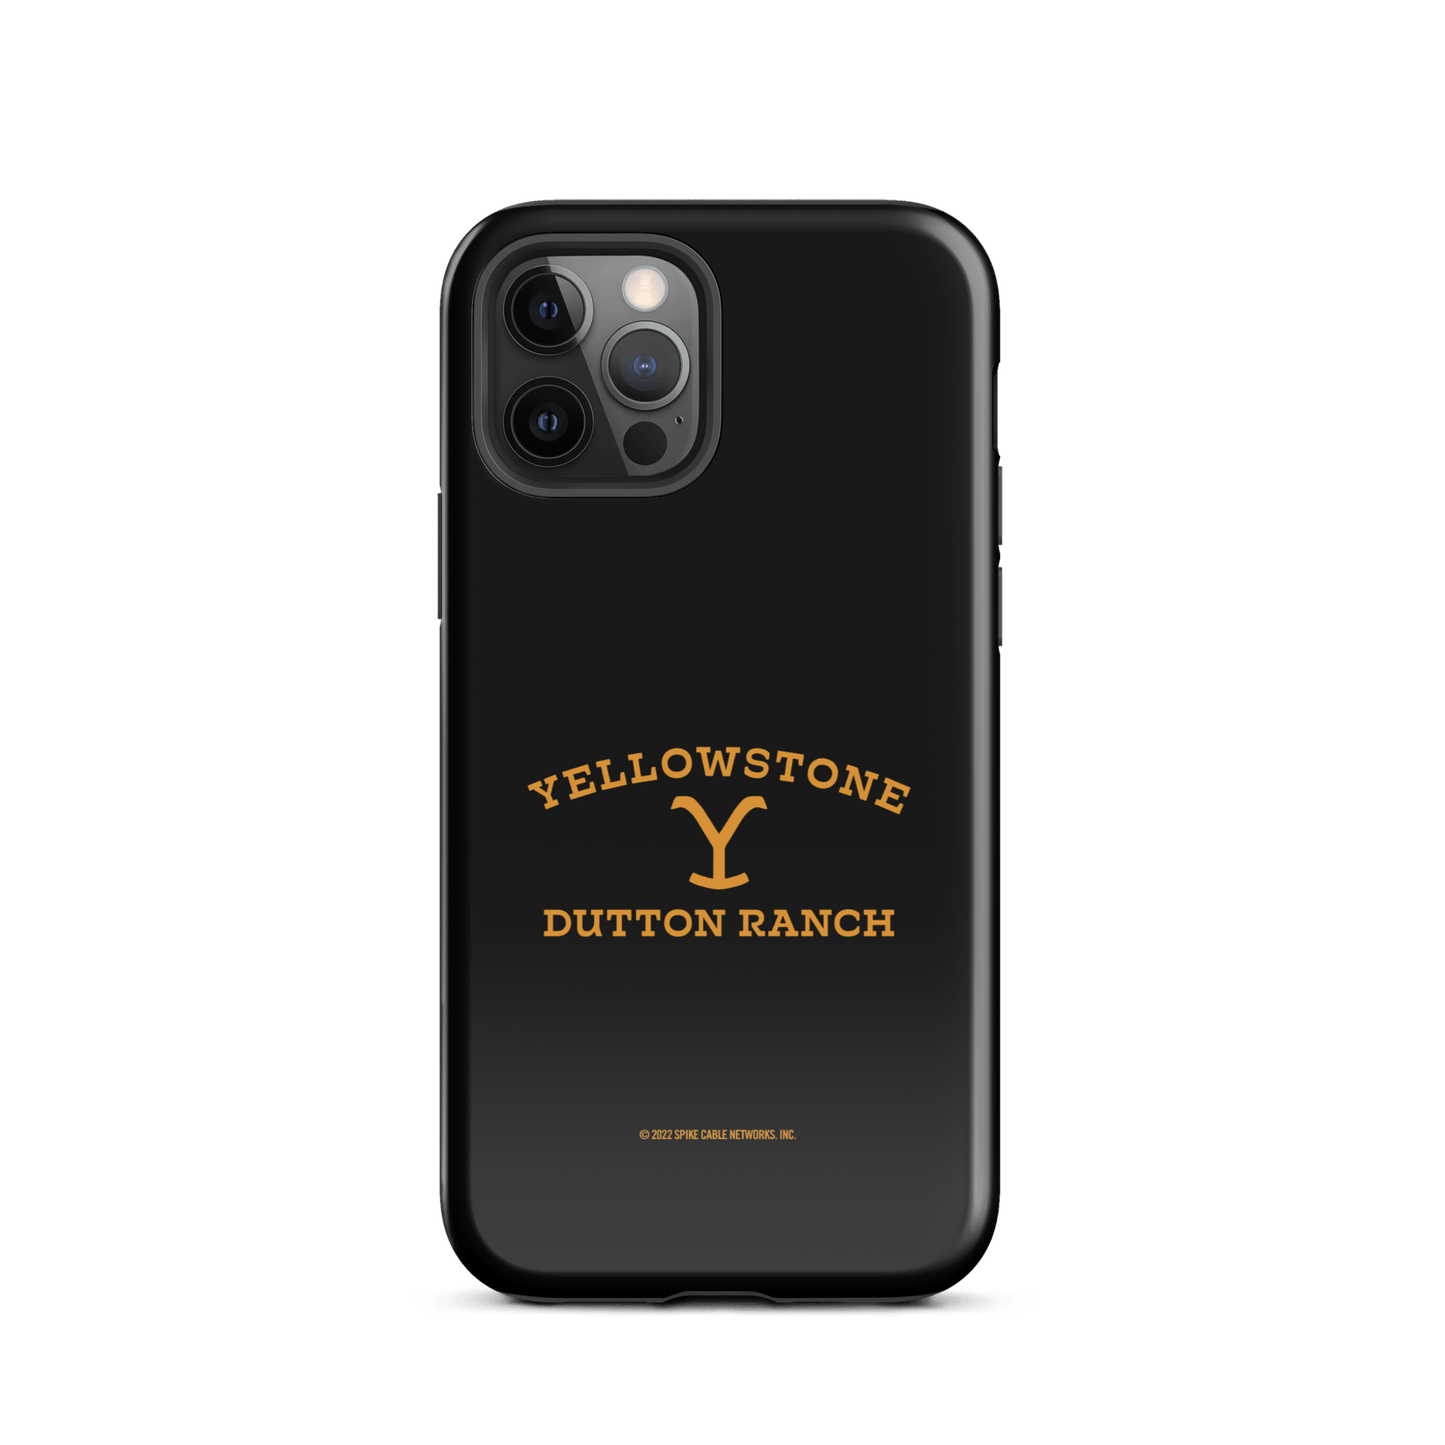 Yellowstone Dutton Ranch Tough Phone Case - iPhone - Paramount Shop